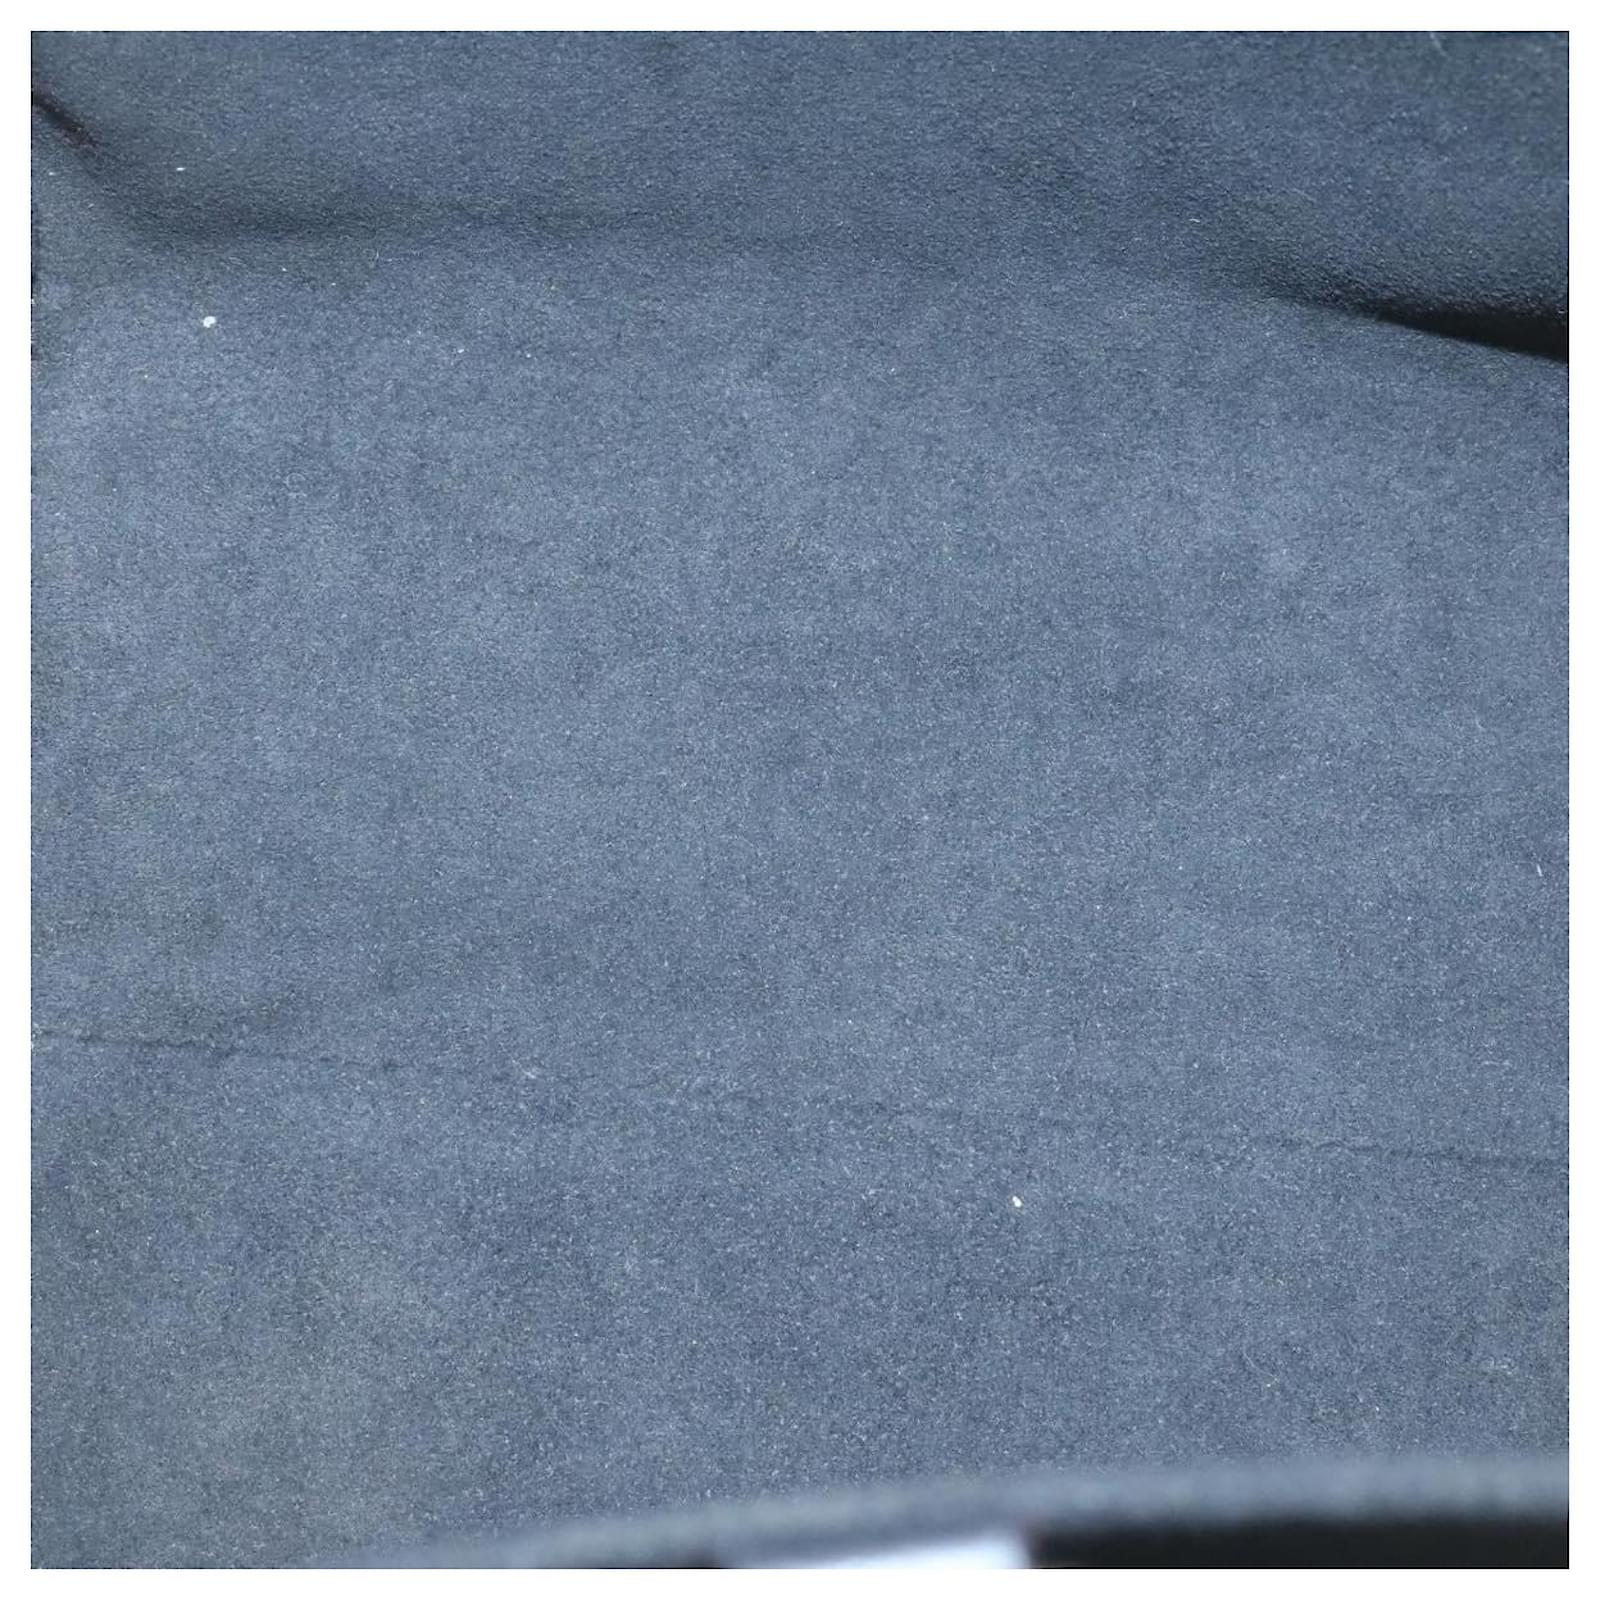 Auth Louis Vuitton Monogram 2way Bag Fold Tote PM M45388 haki,Noir,Claim